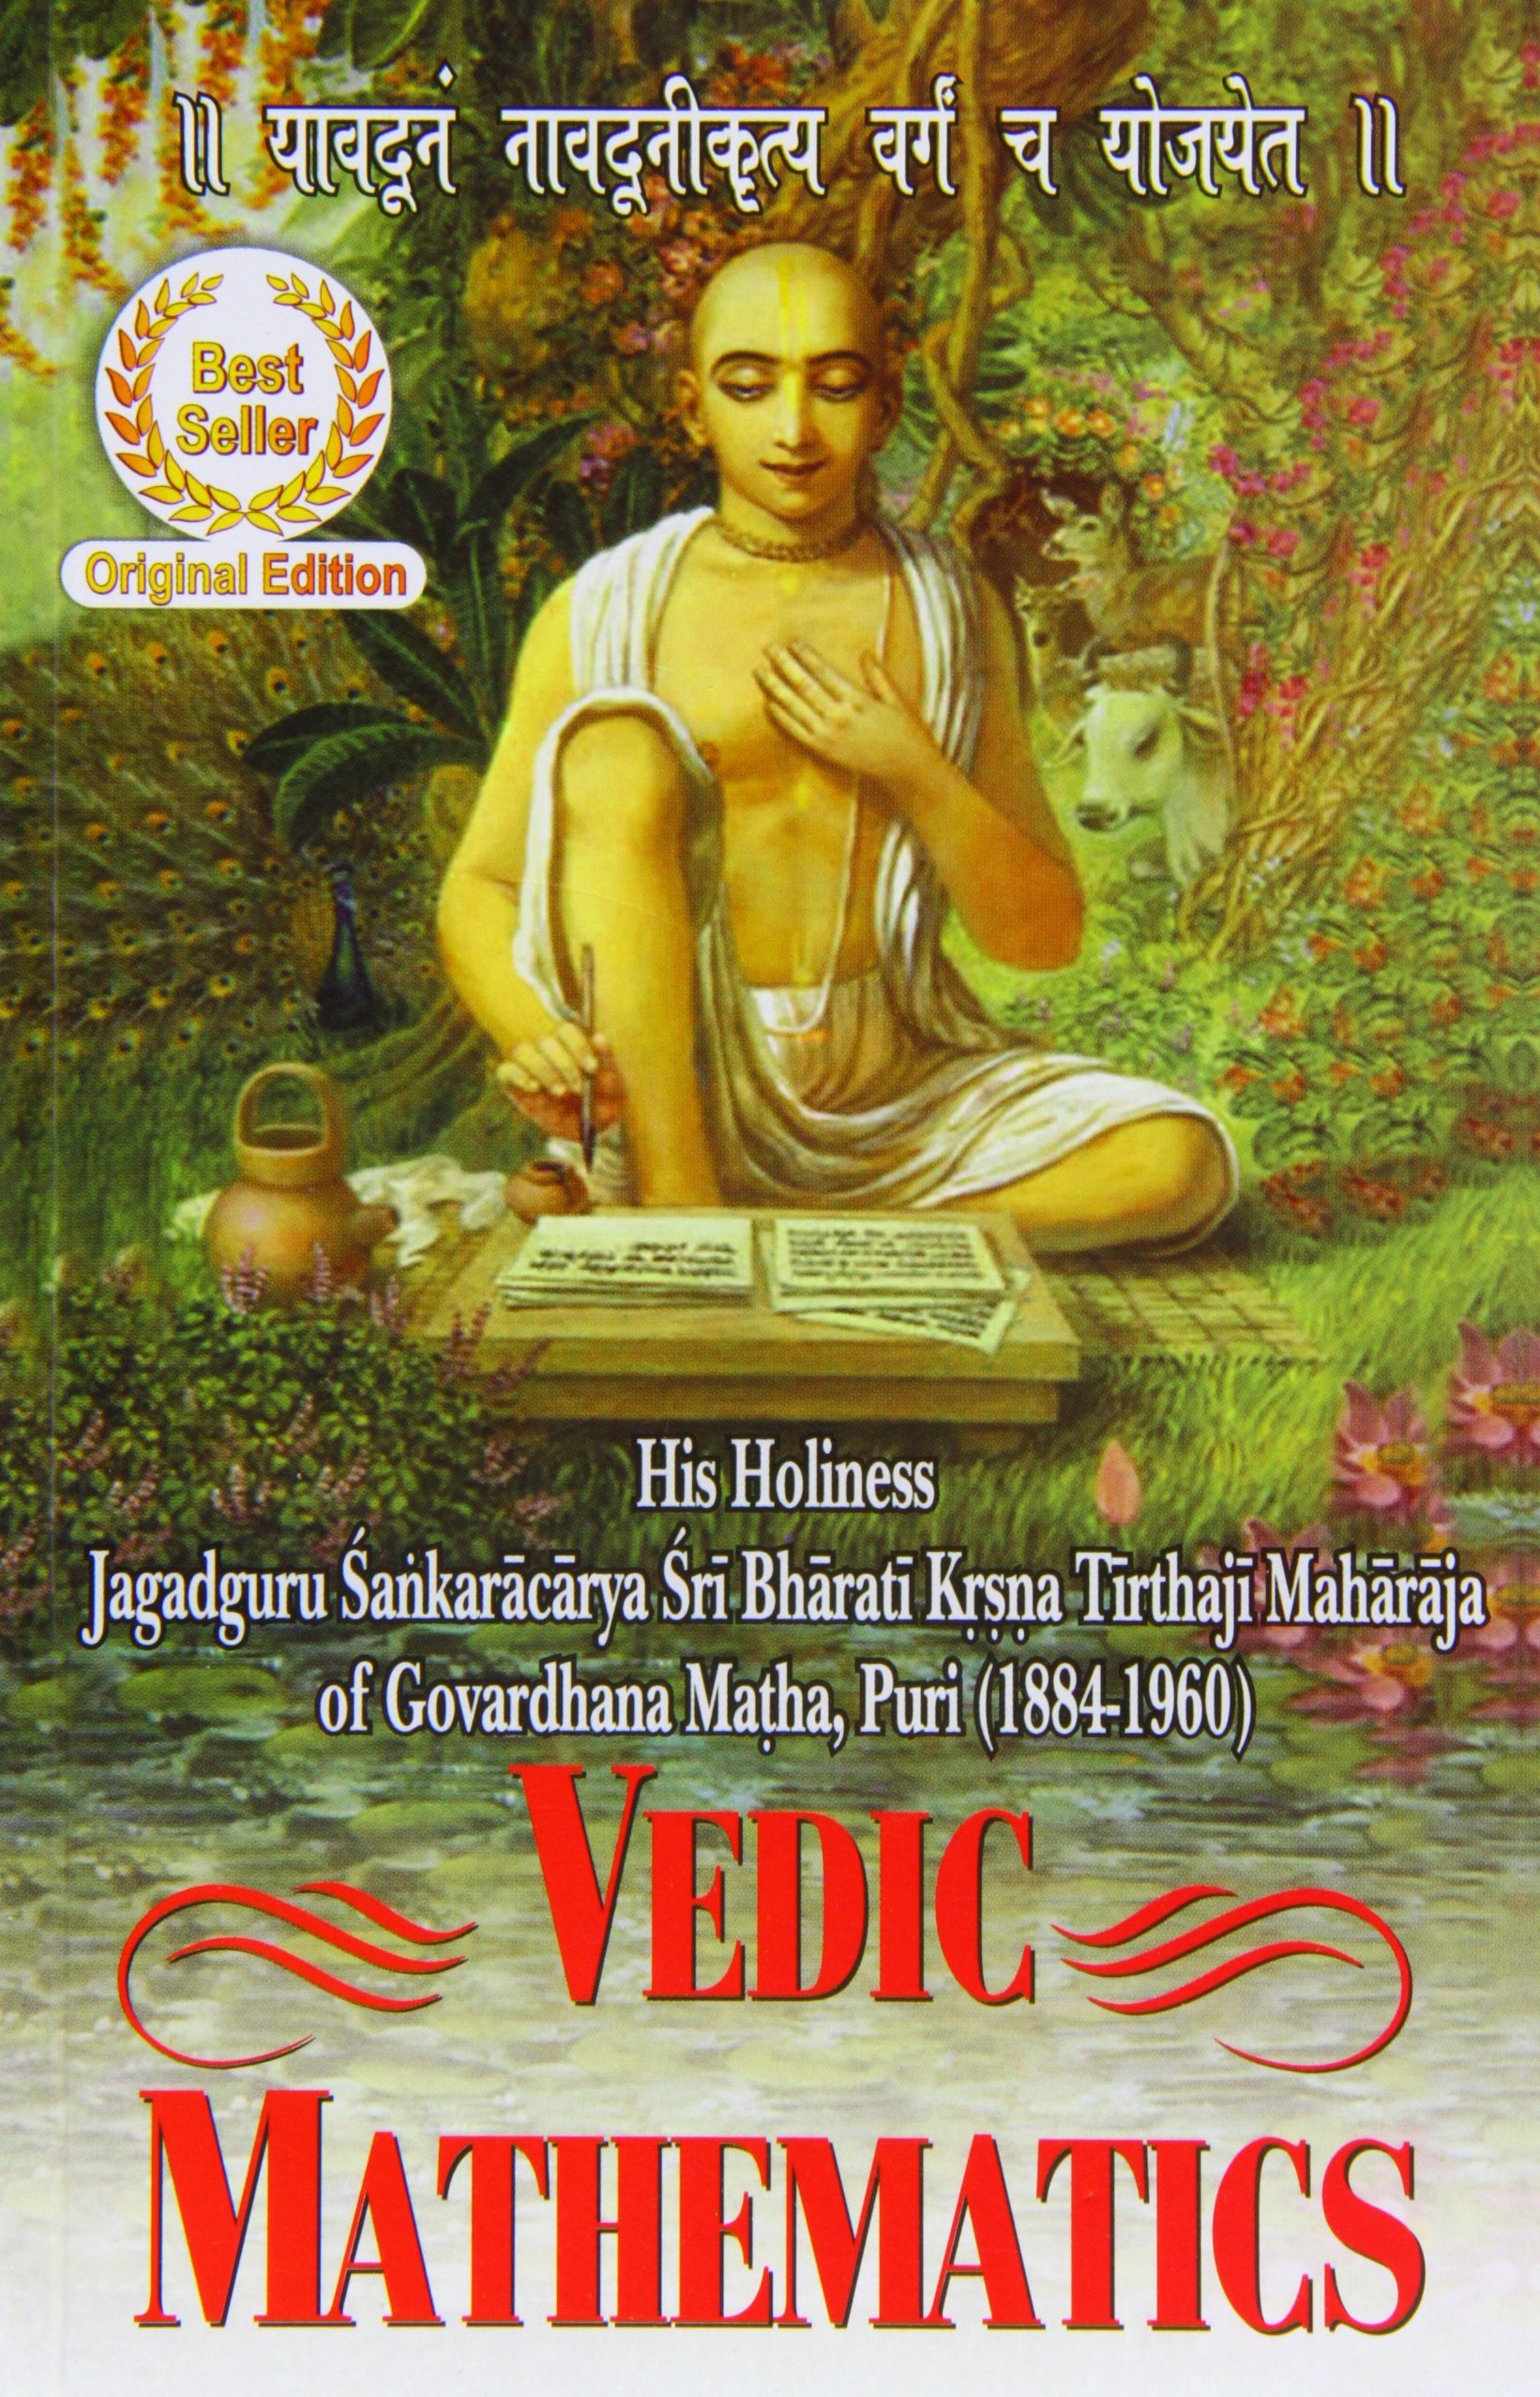 research paper on vedic mathematics